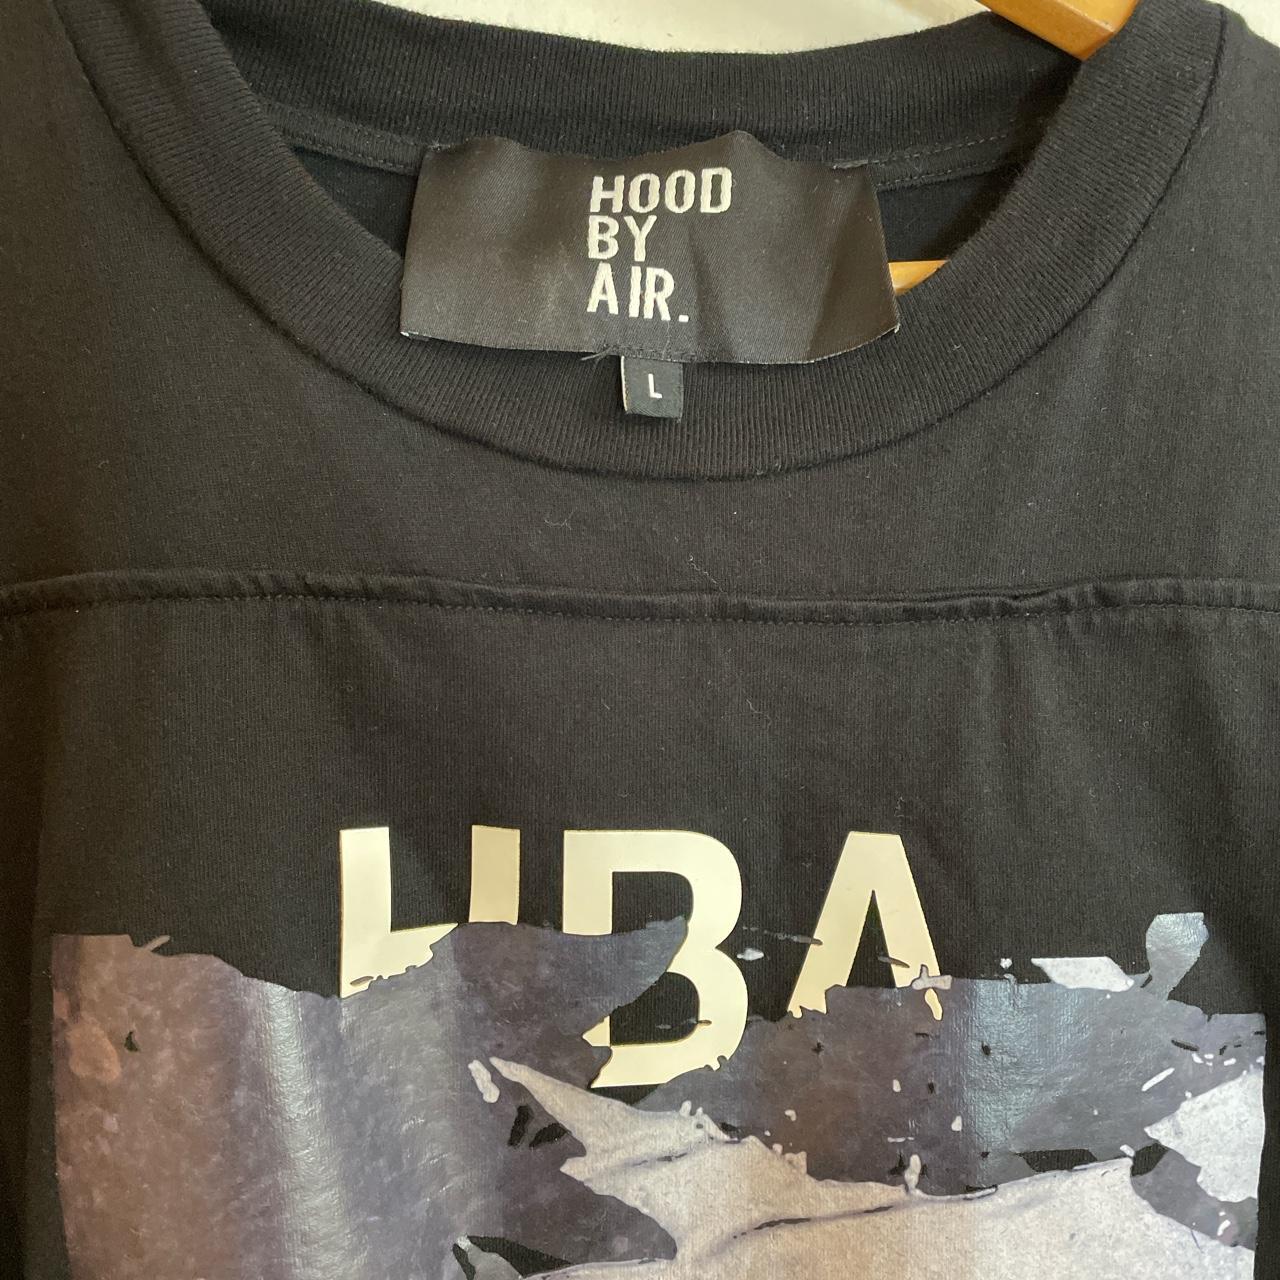 Product Image 3 - HBA
Black Long Sleeve Shirt 
(RARE)
NEVER